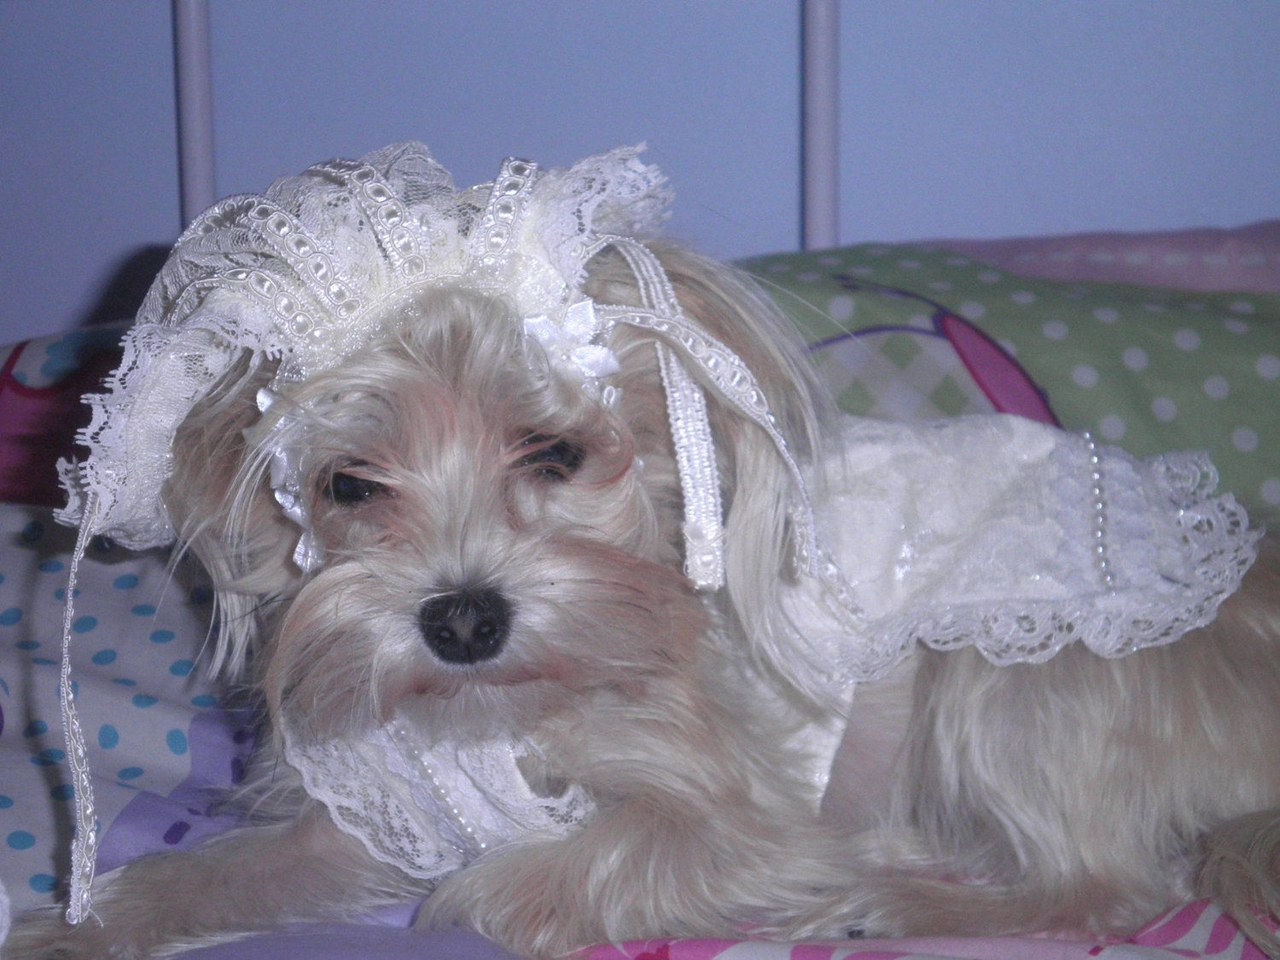 3 dogs wearing wedding dresses on etsy 0404